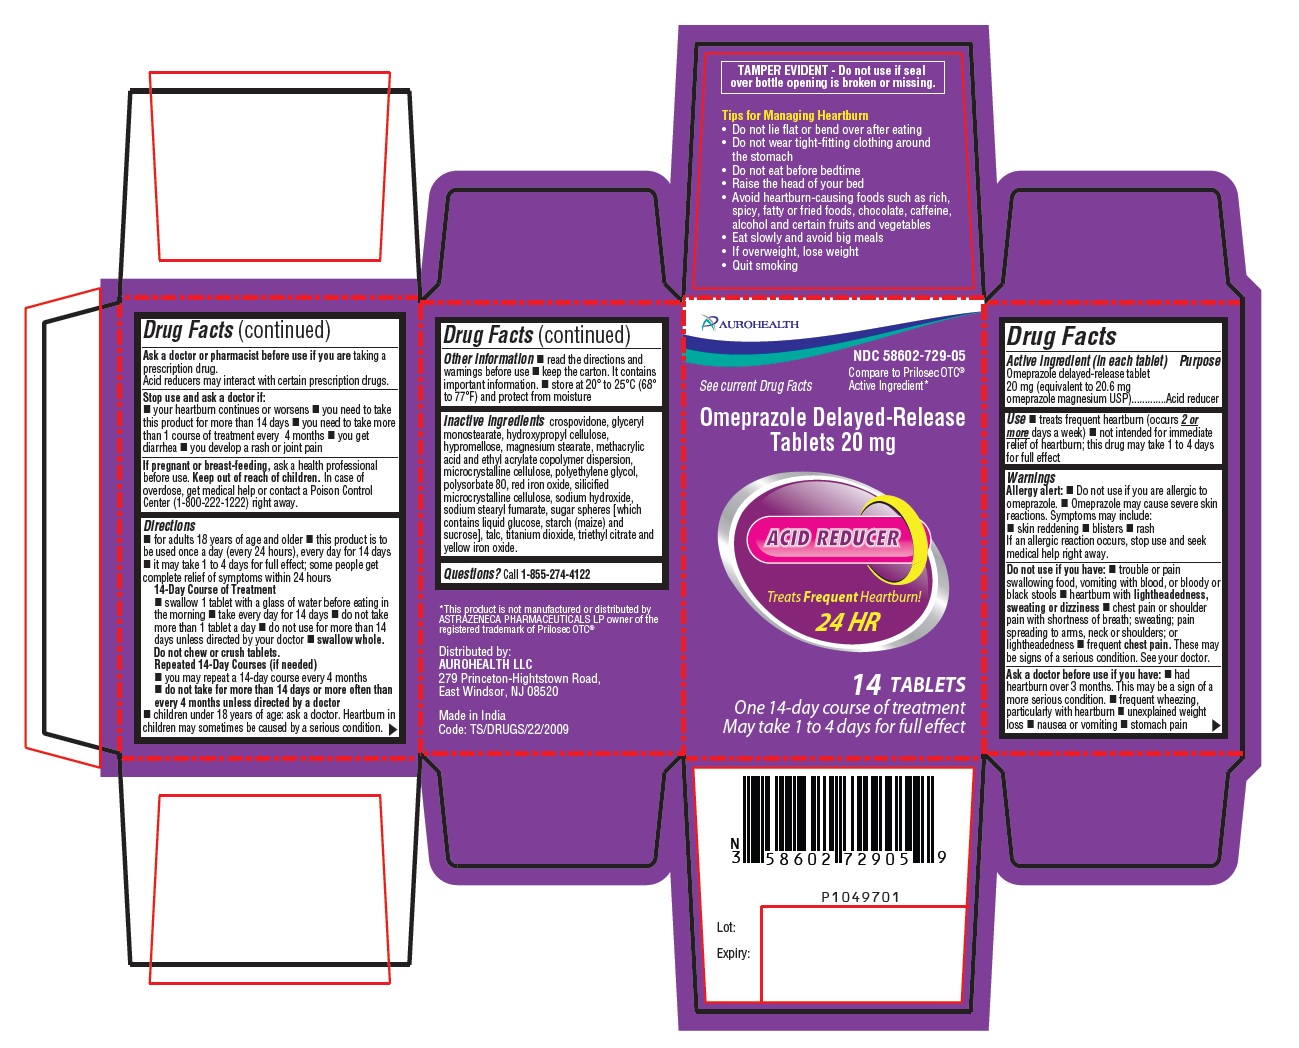 ACKAGE LABEL-PRINCIPAL DISPLAY PANEL - 20 mg Container Carton Label